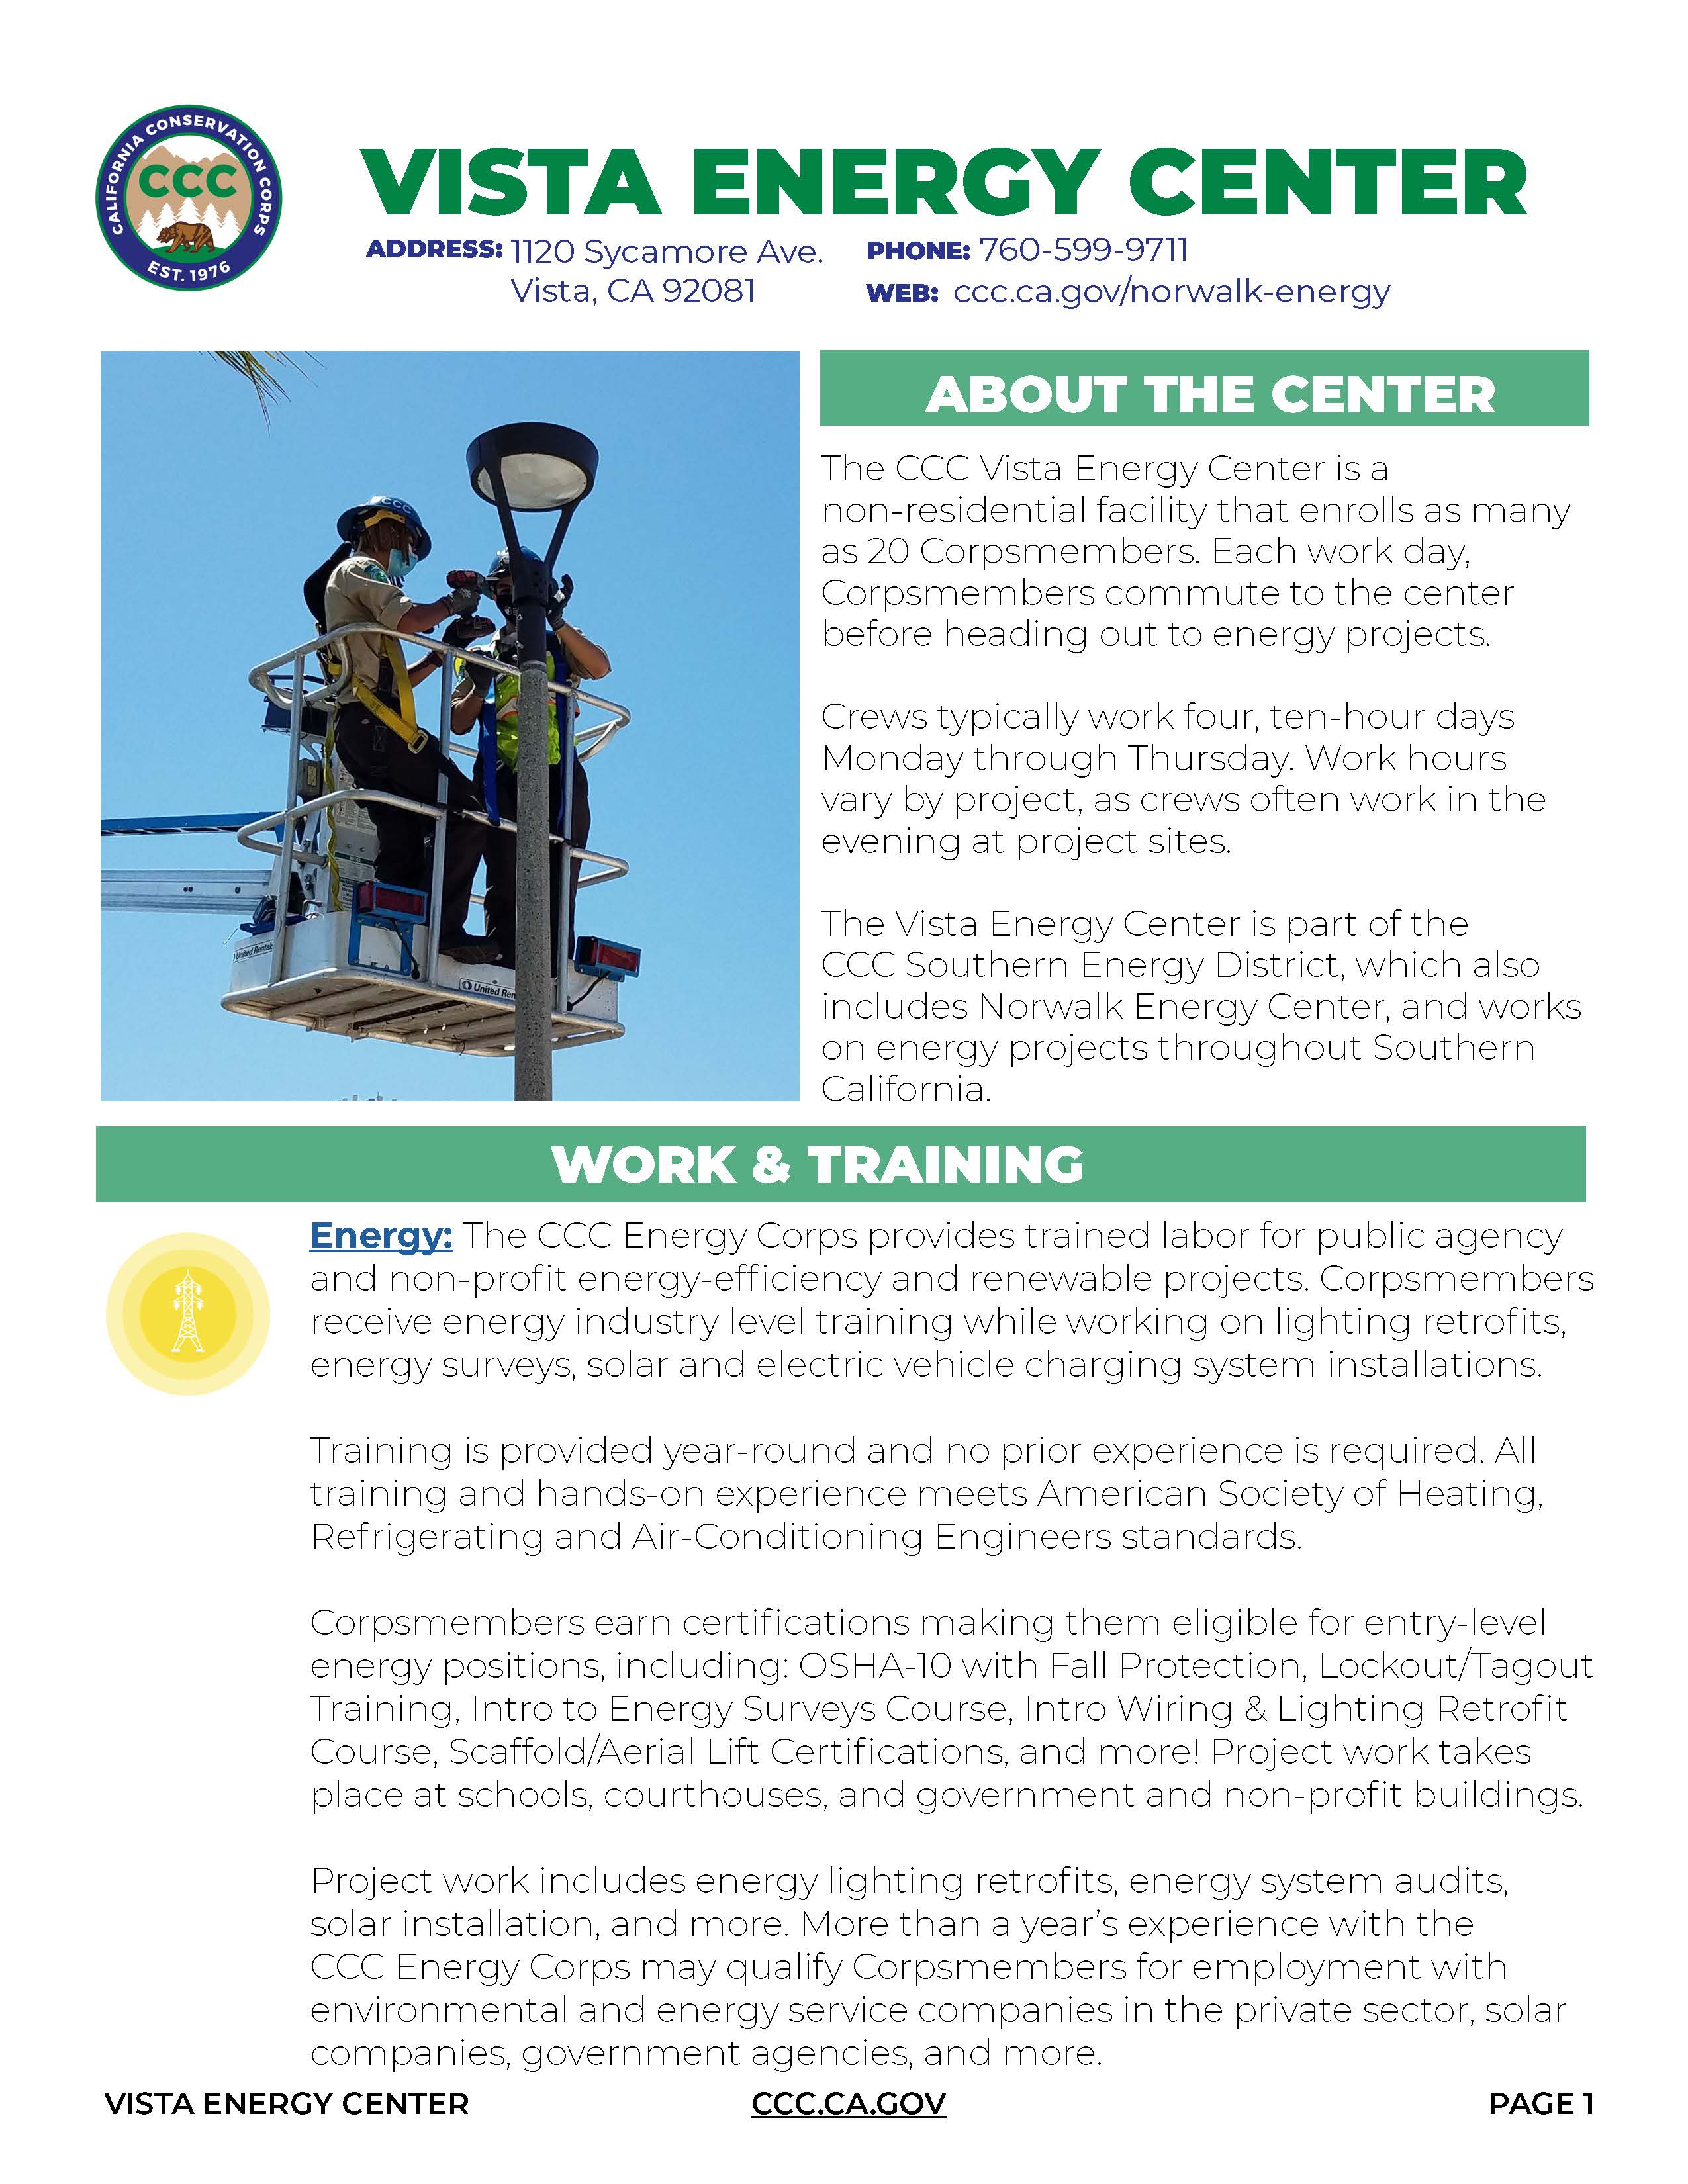 Image of Vista Energy Center Fact Sheet